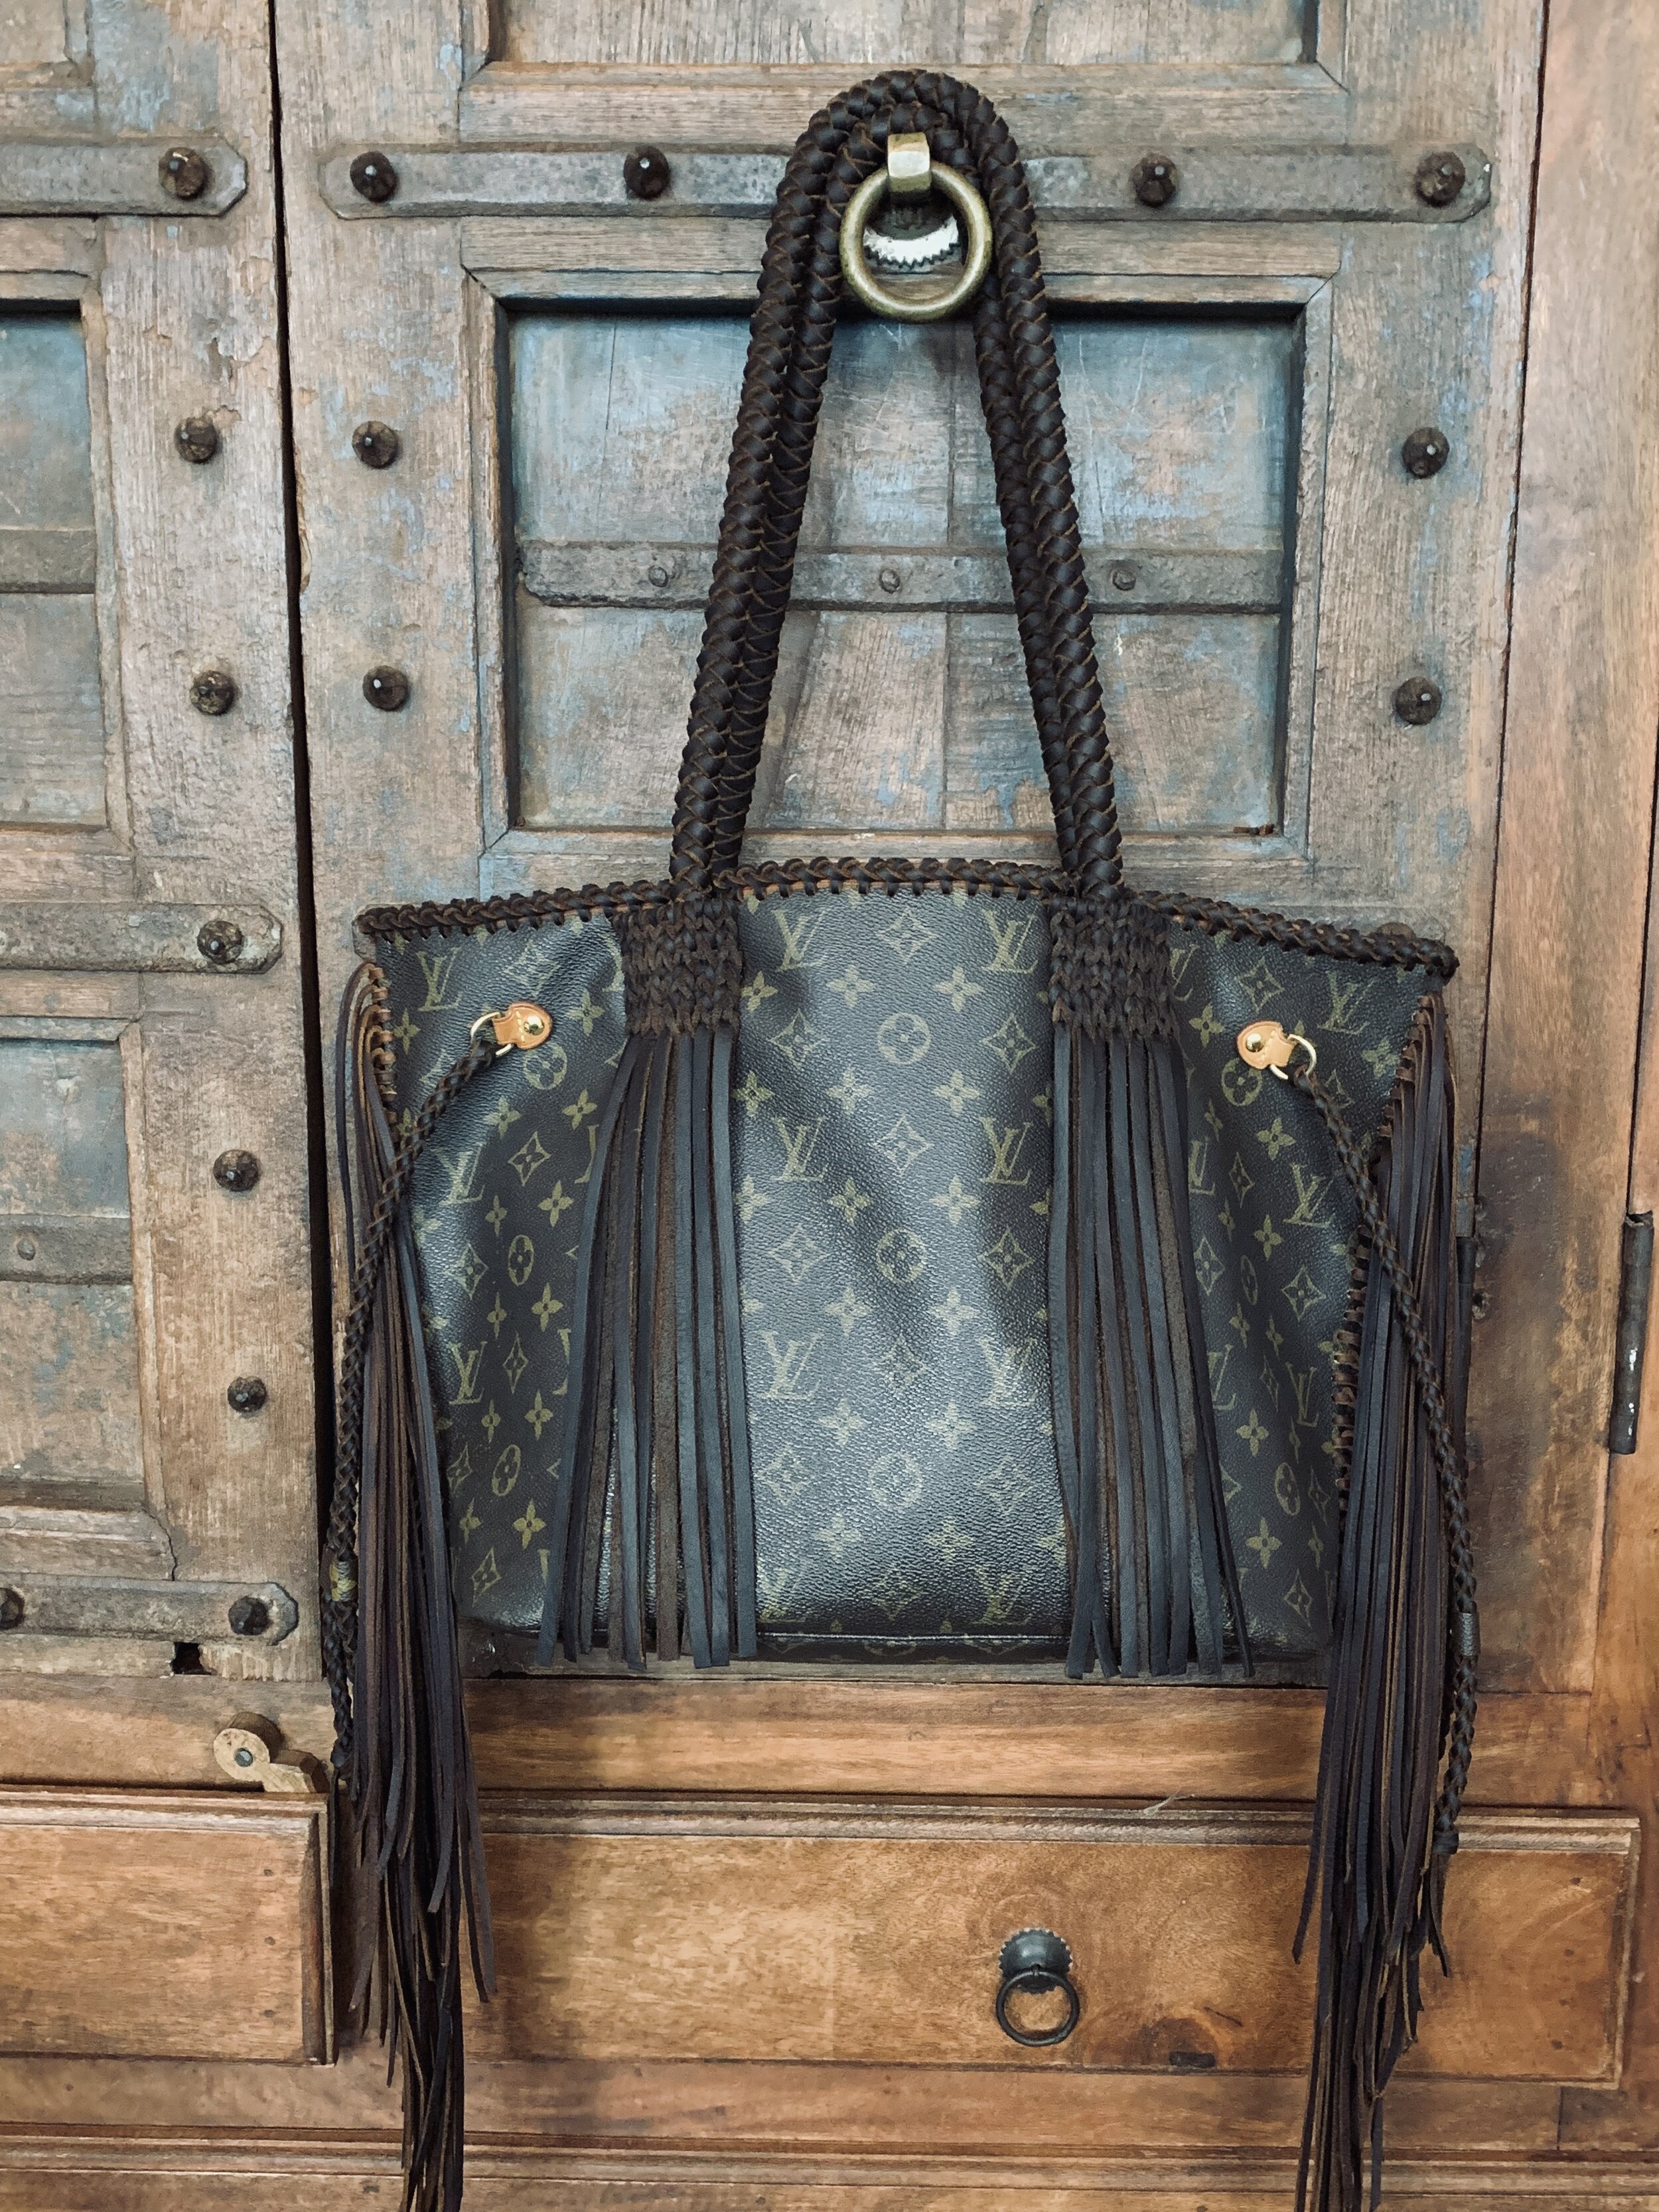 French Tote - with Boho Fringe, Braided Handle – Vintage Boho Bags